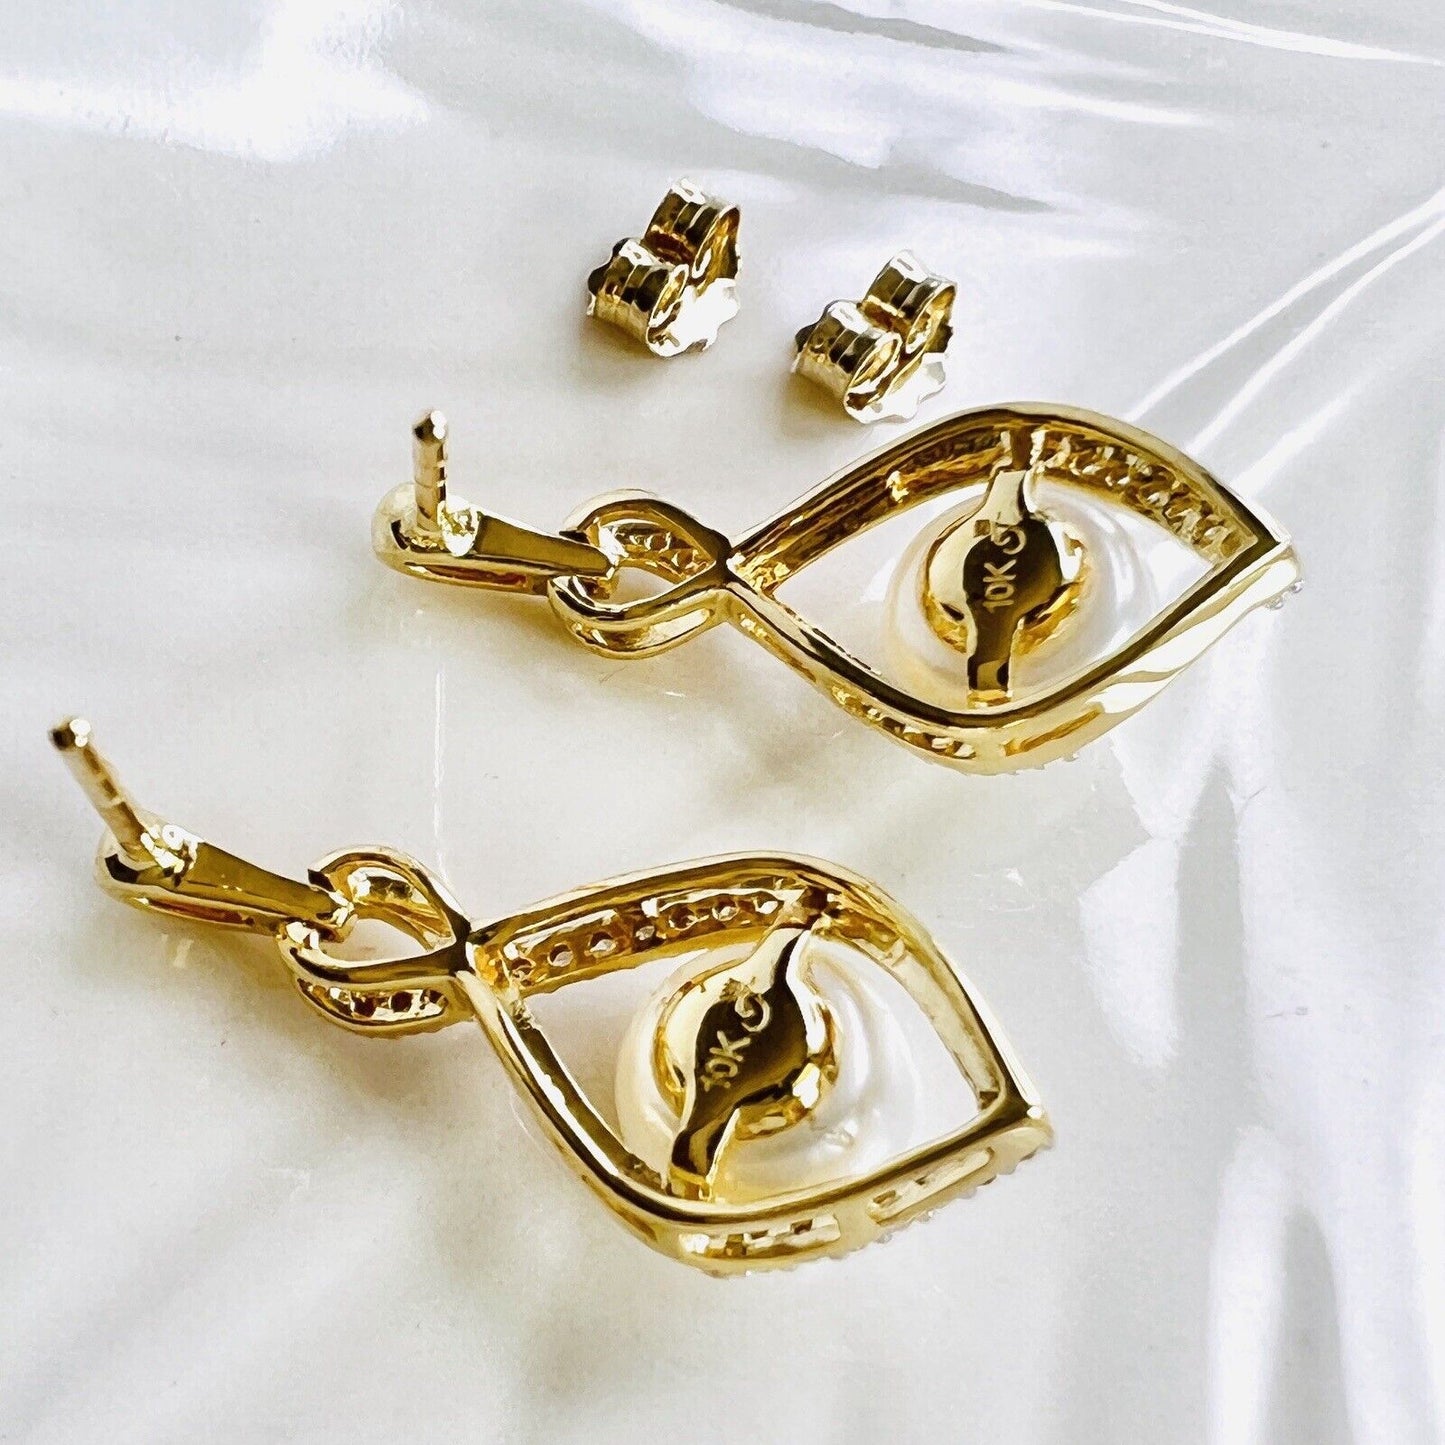 Solid 10k Yellow Gold Genuine Pearl (7mm) & Diamond Dangle Drop Earrings, New